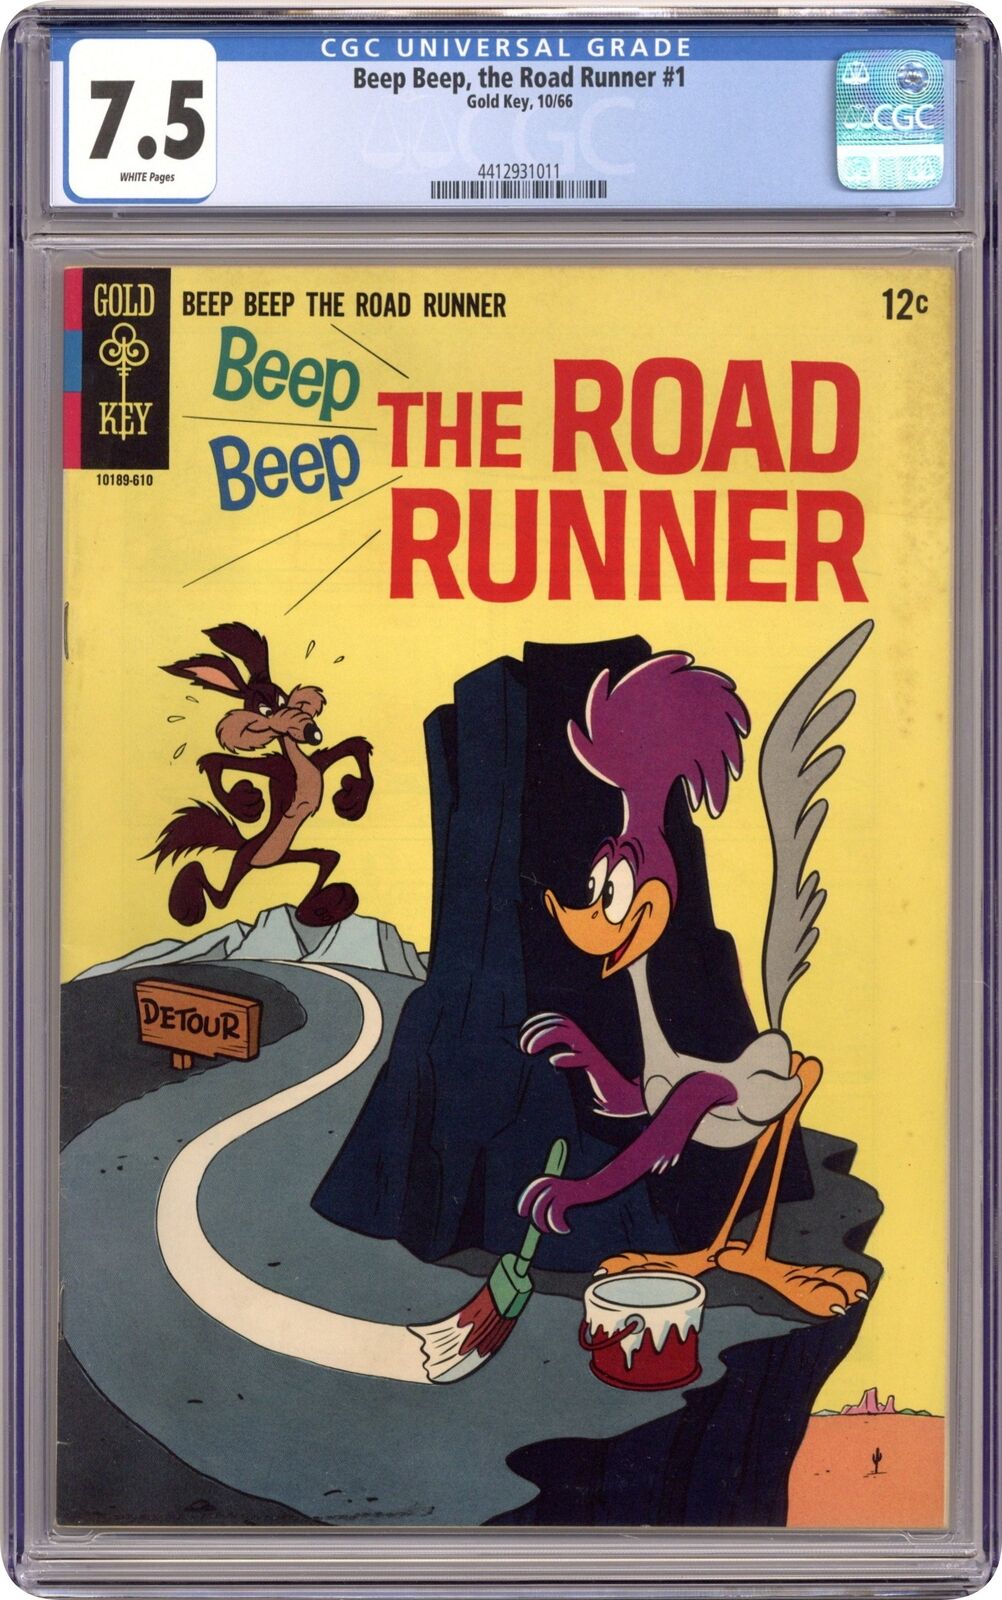 Beep Beep the Road Runner #1 CGC 7.5 1966 4412931011